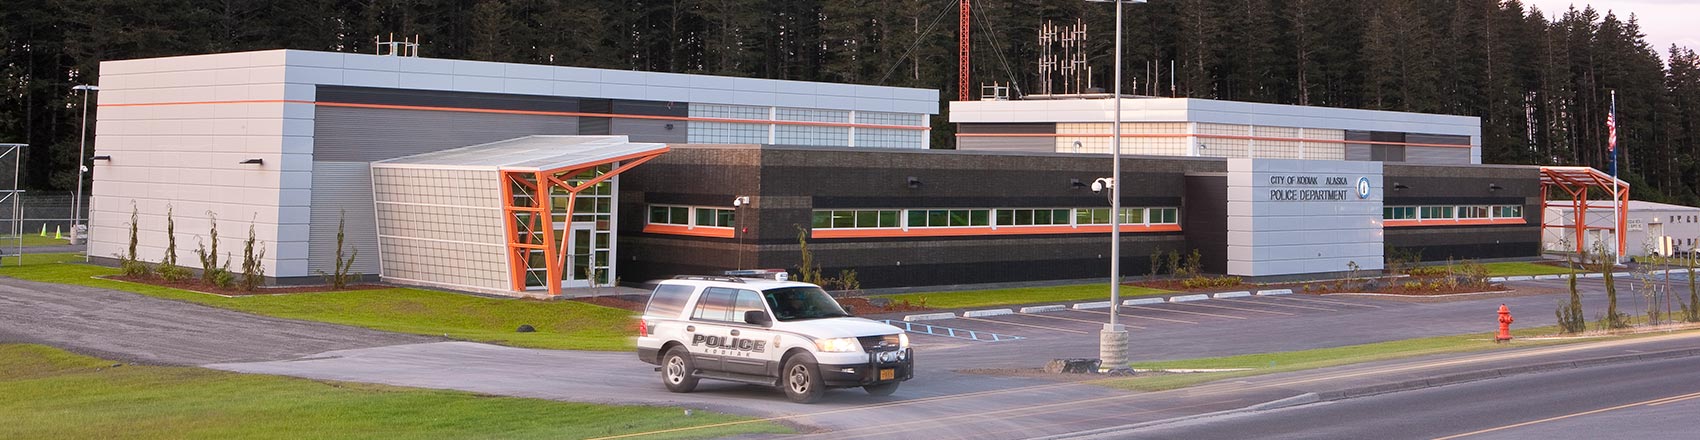 City of Kodiak Police Department